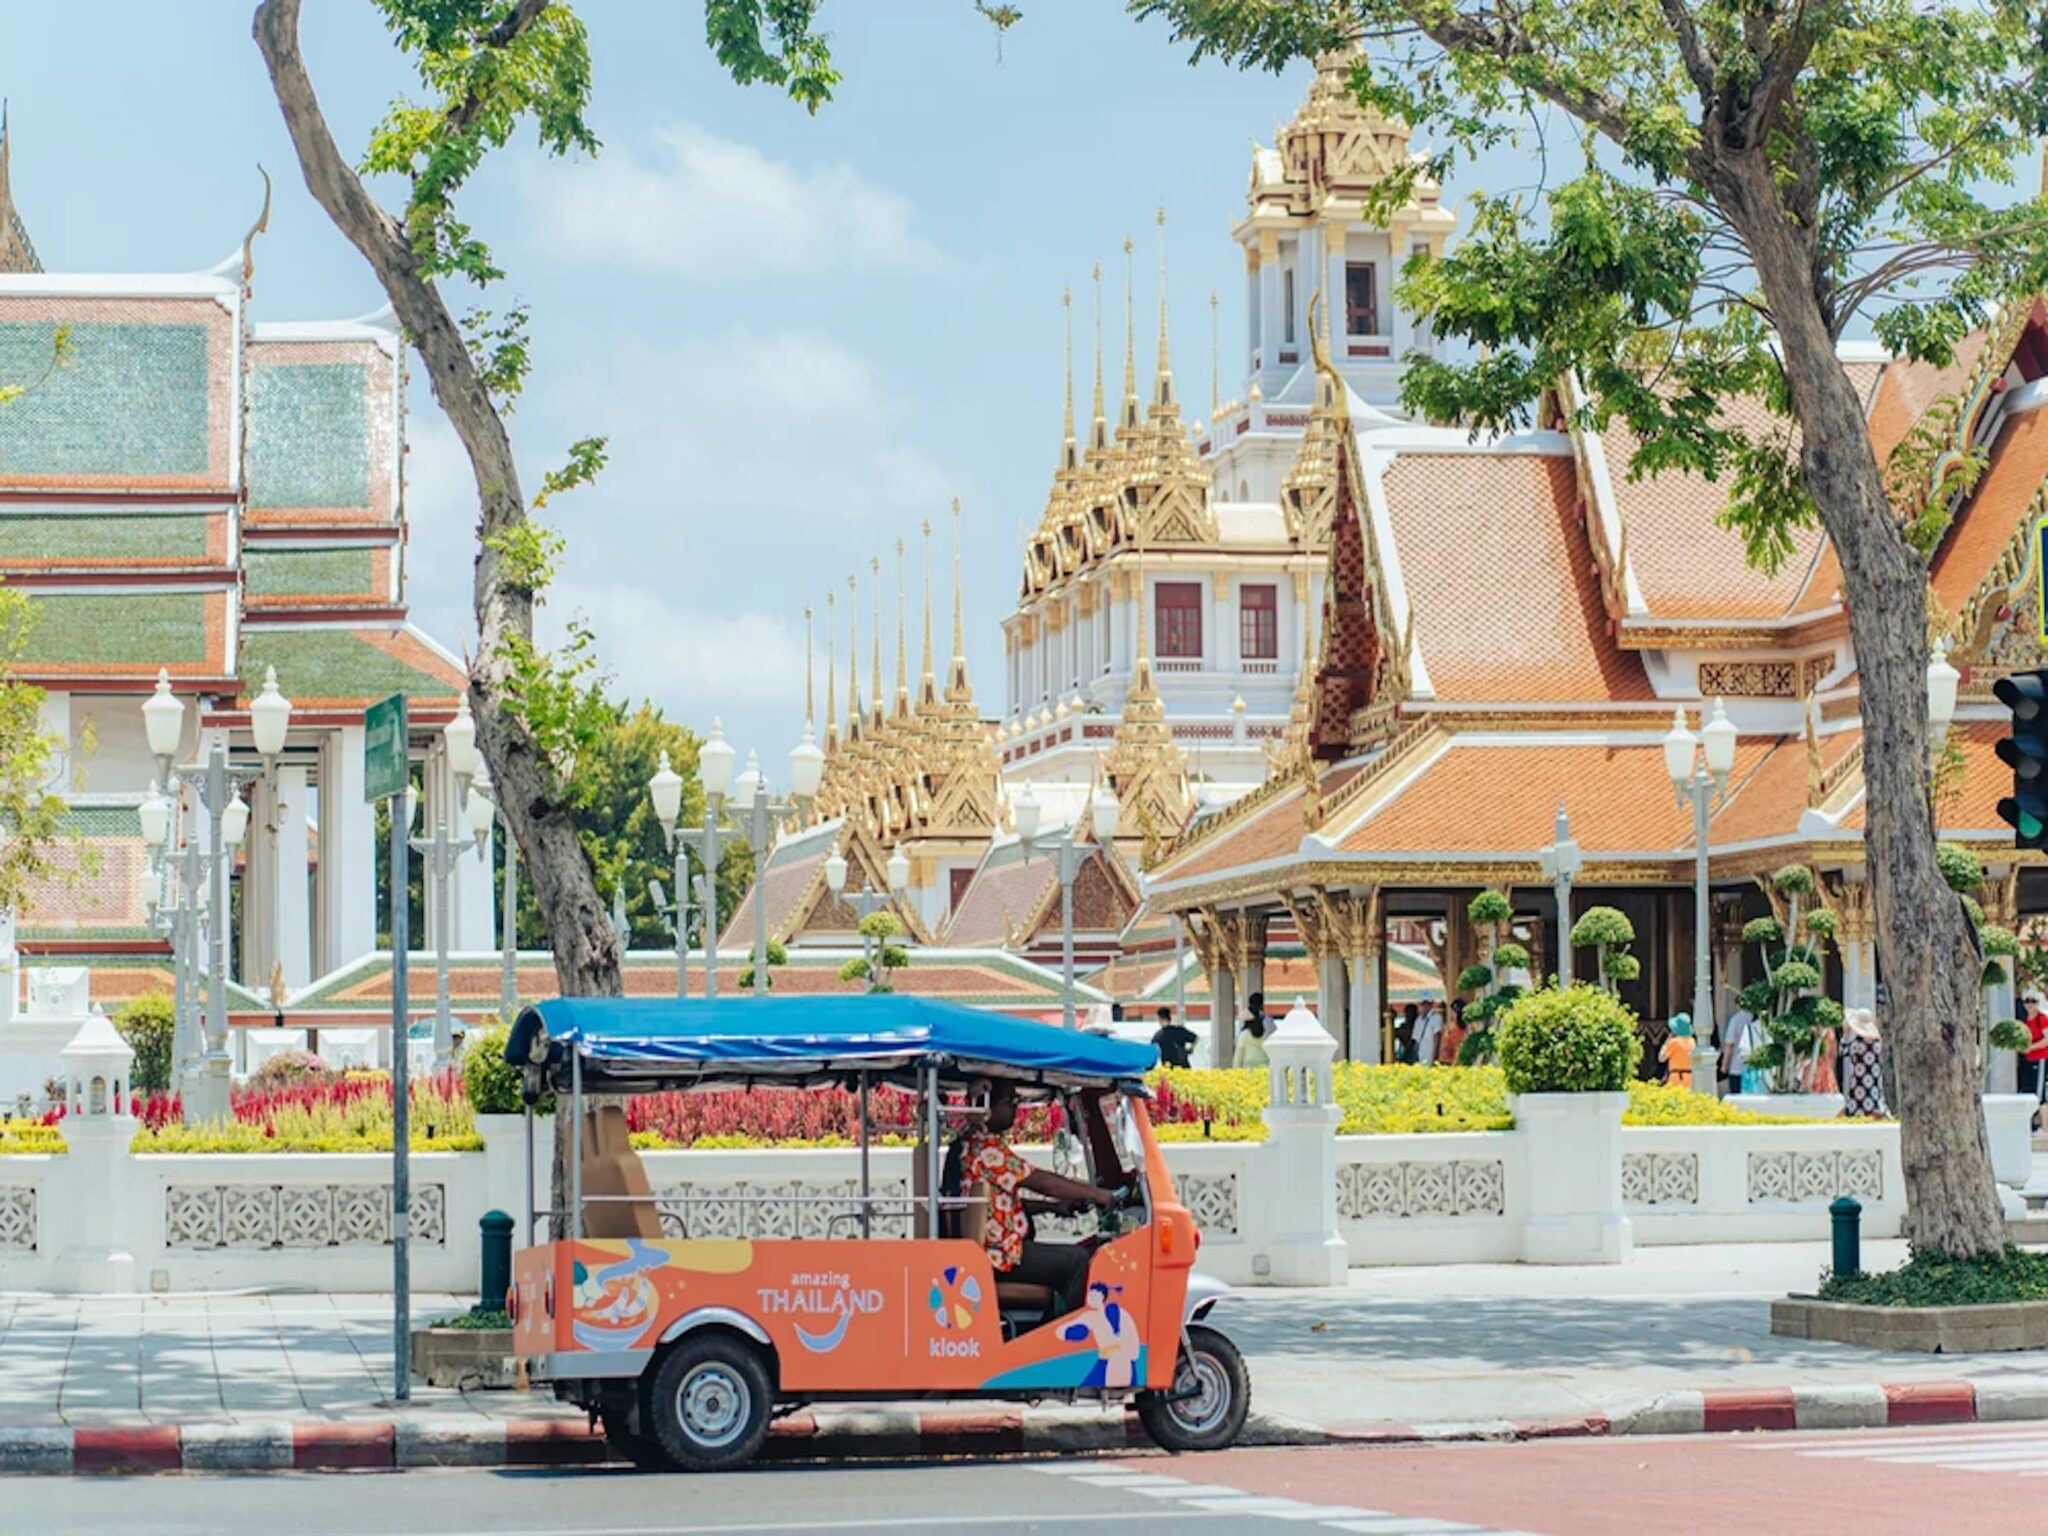 Klook & Thailand Tourism Authority Tuk Tuk at Wat Ratchanadda and the Loha Prasat, Buddhist temples in Bangkok. Source: Klook